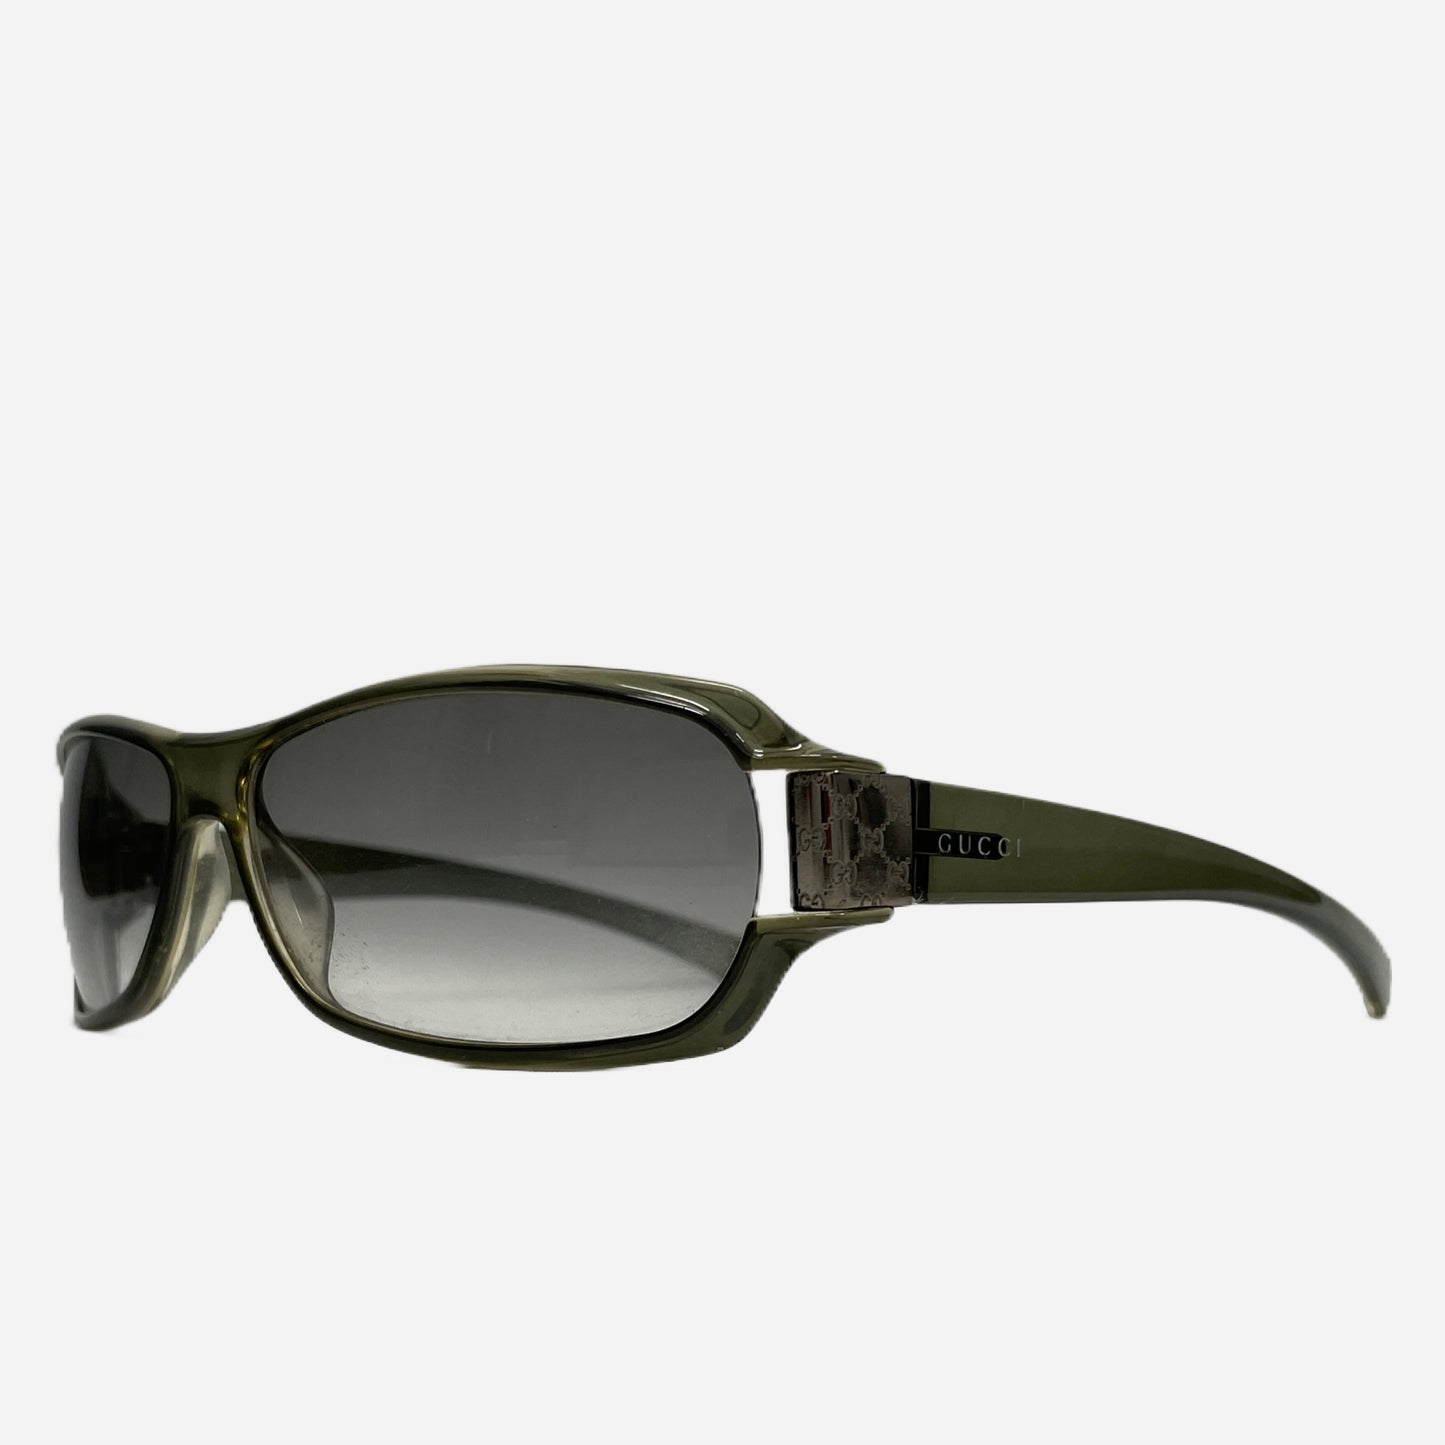 Vintage-Gucci-Sunglasses-Sonnenbrille-Schnelle-Brille-90s-2547_S-The-Seekers-front